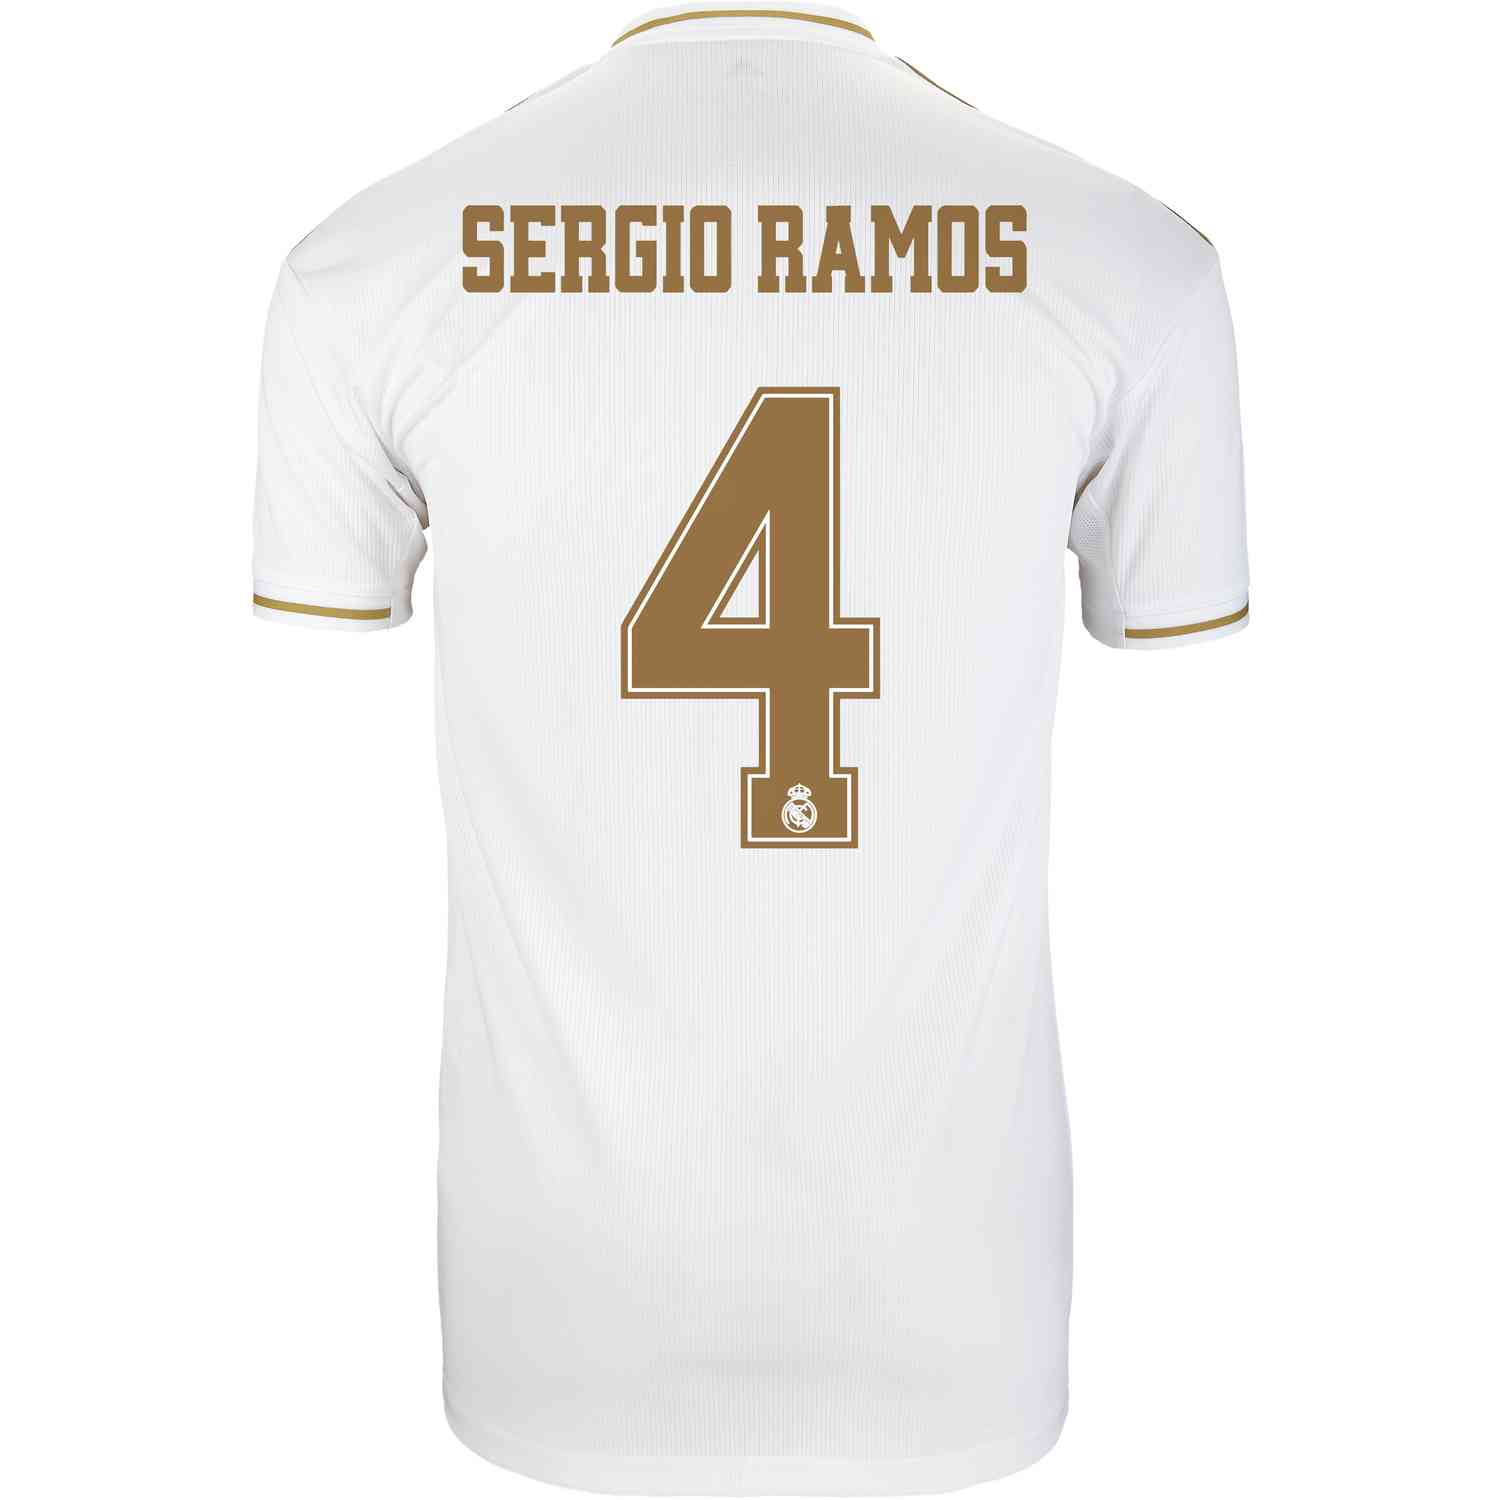 2019/20 adidas Sergio Ramos Real Home Jersey -